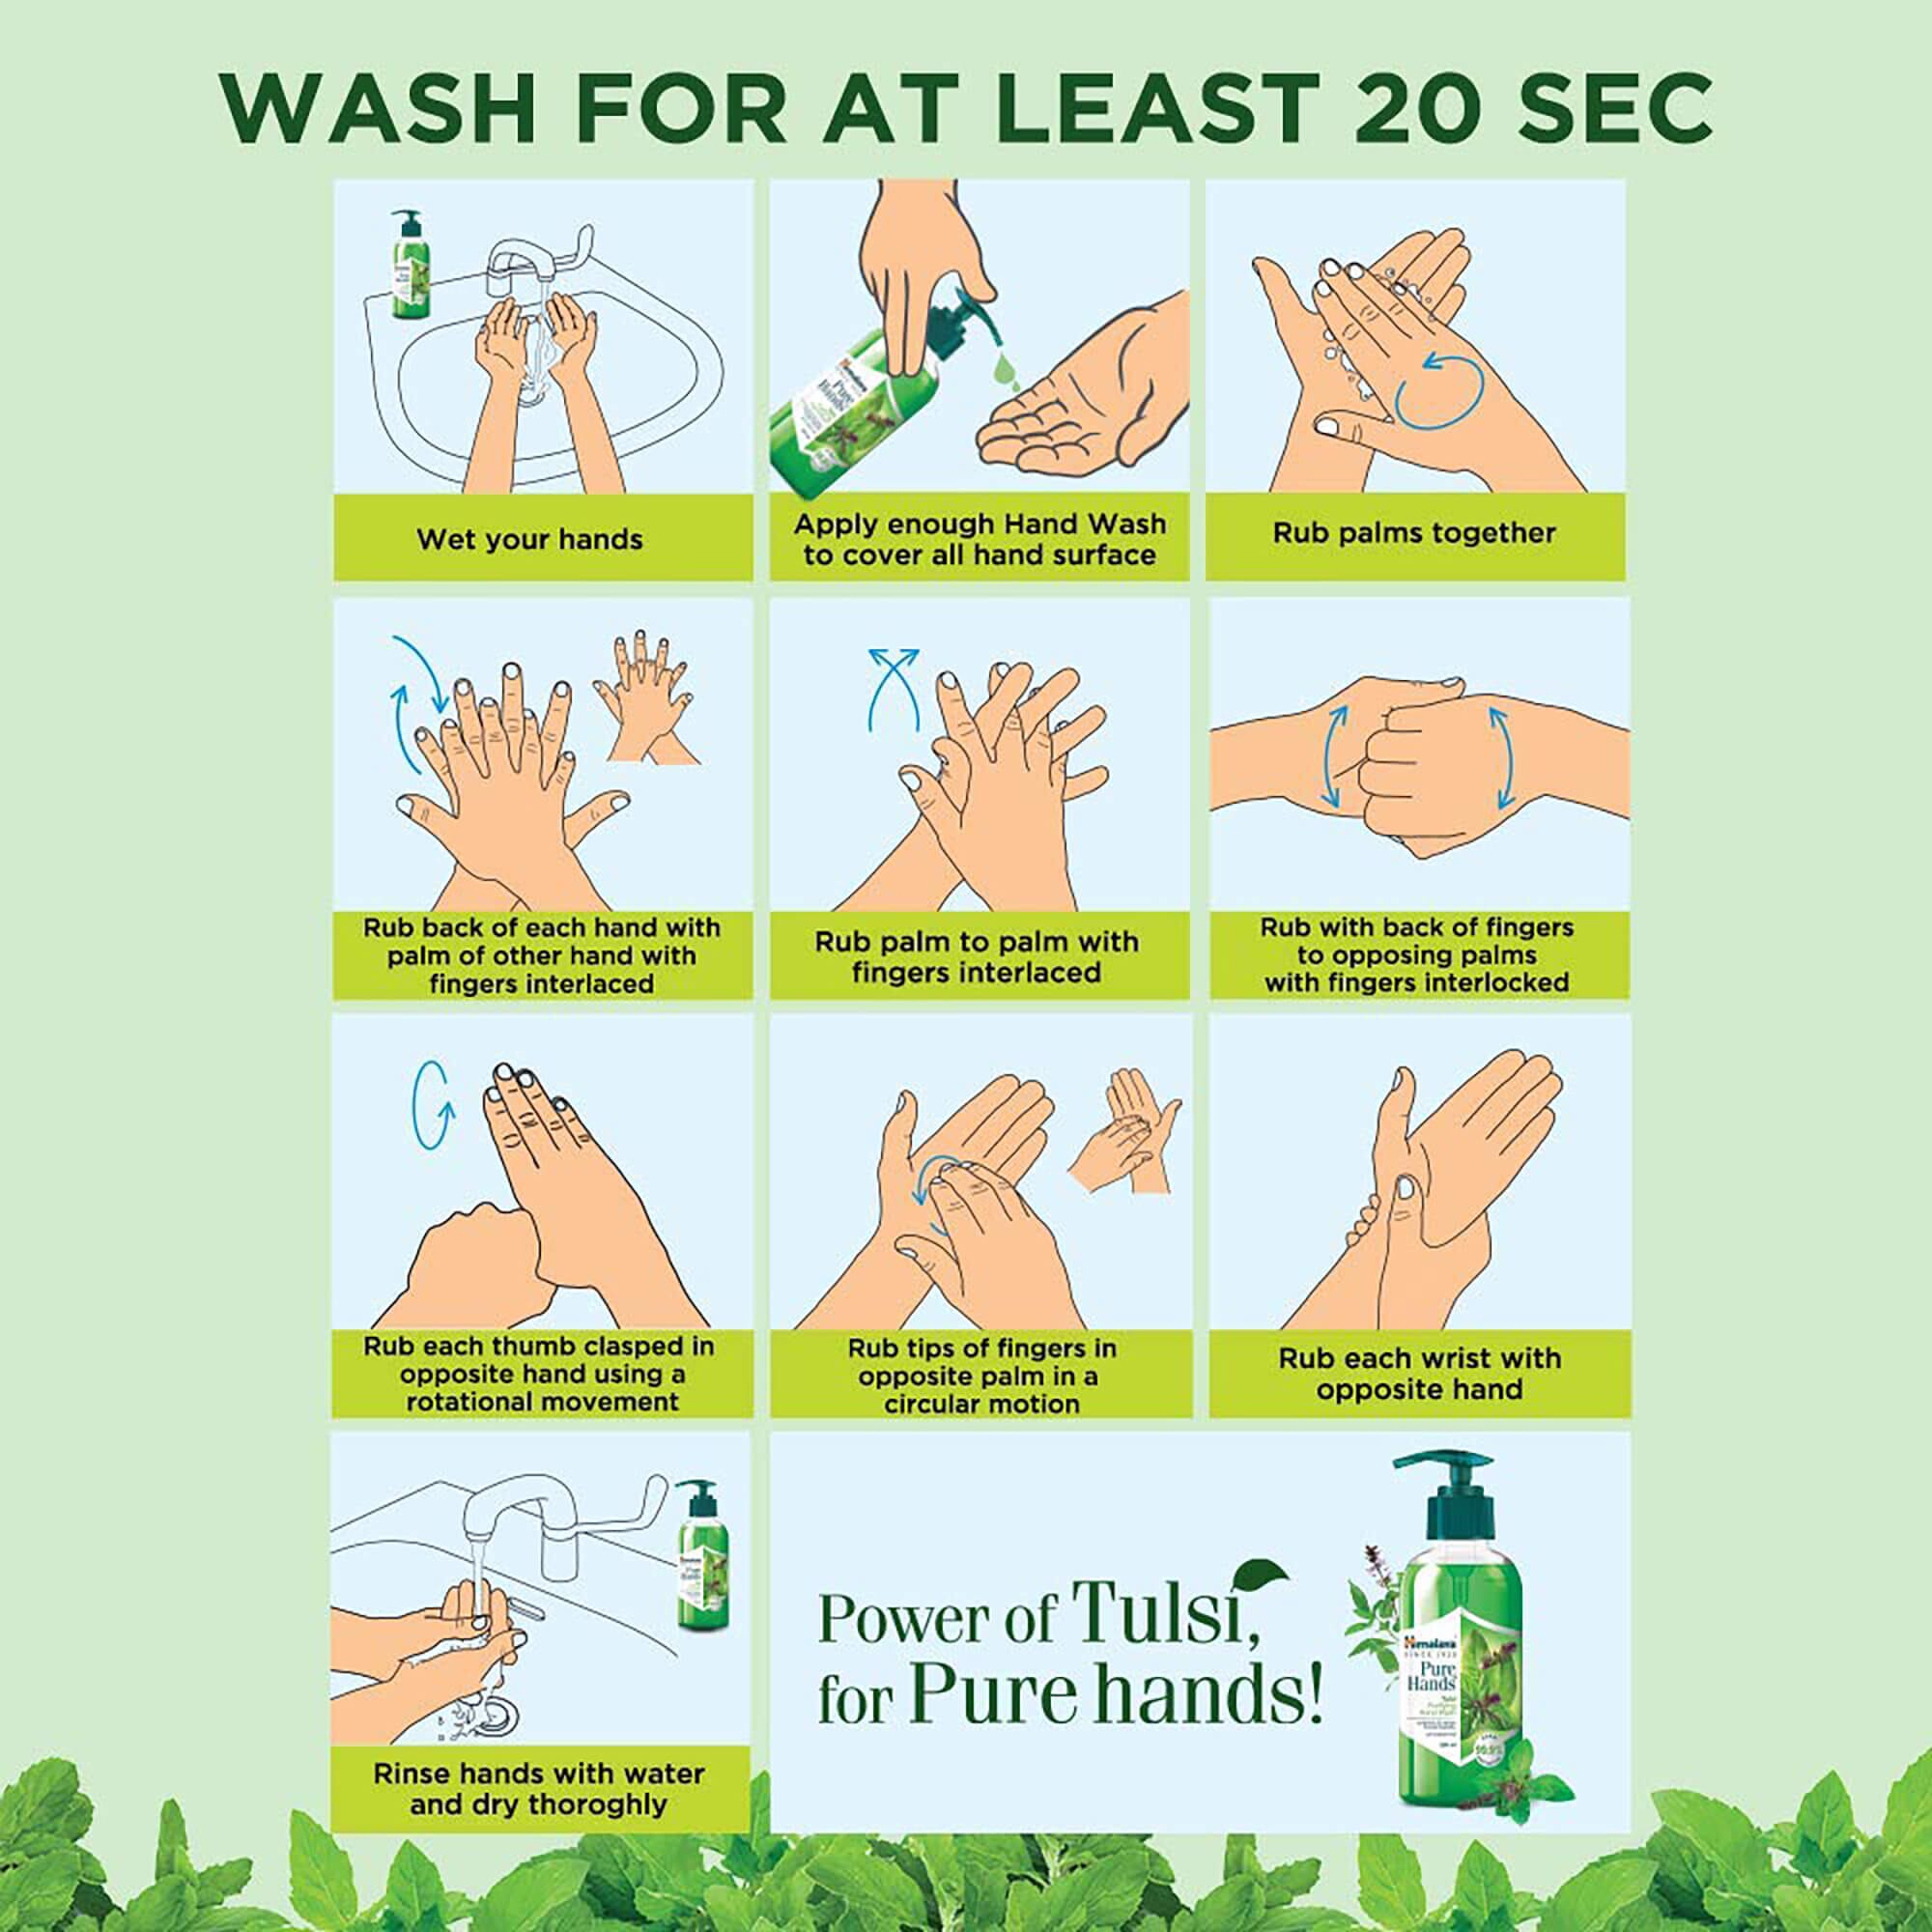 Himalaya Pure Hands Tulsi Purifying Hand Wash- 750ml x 2